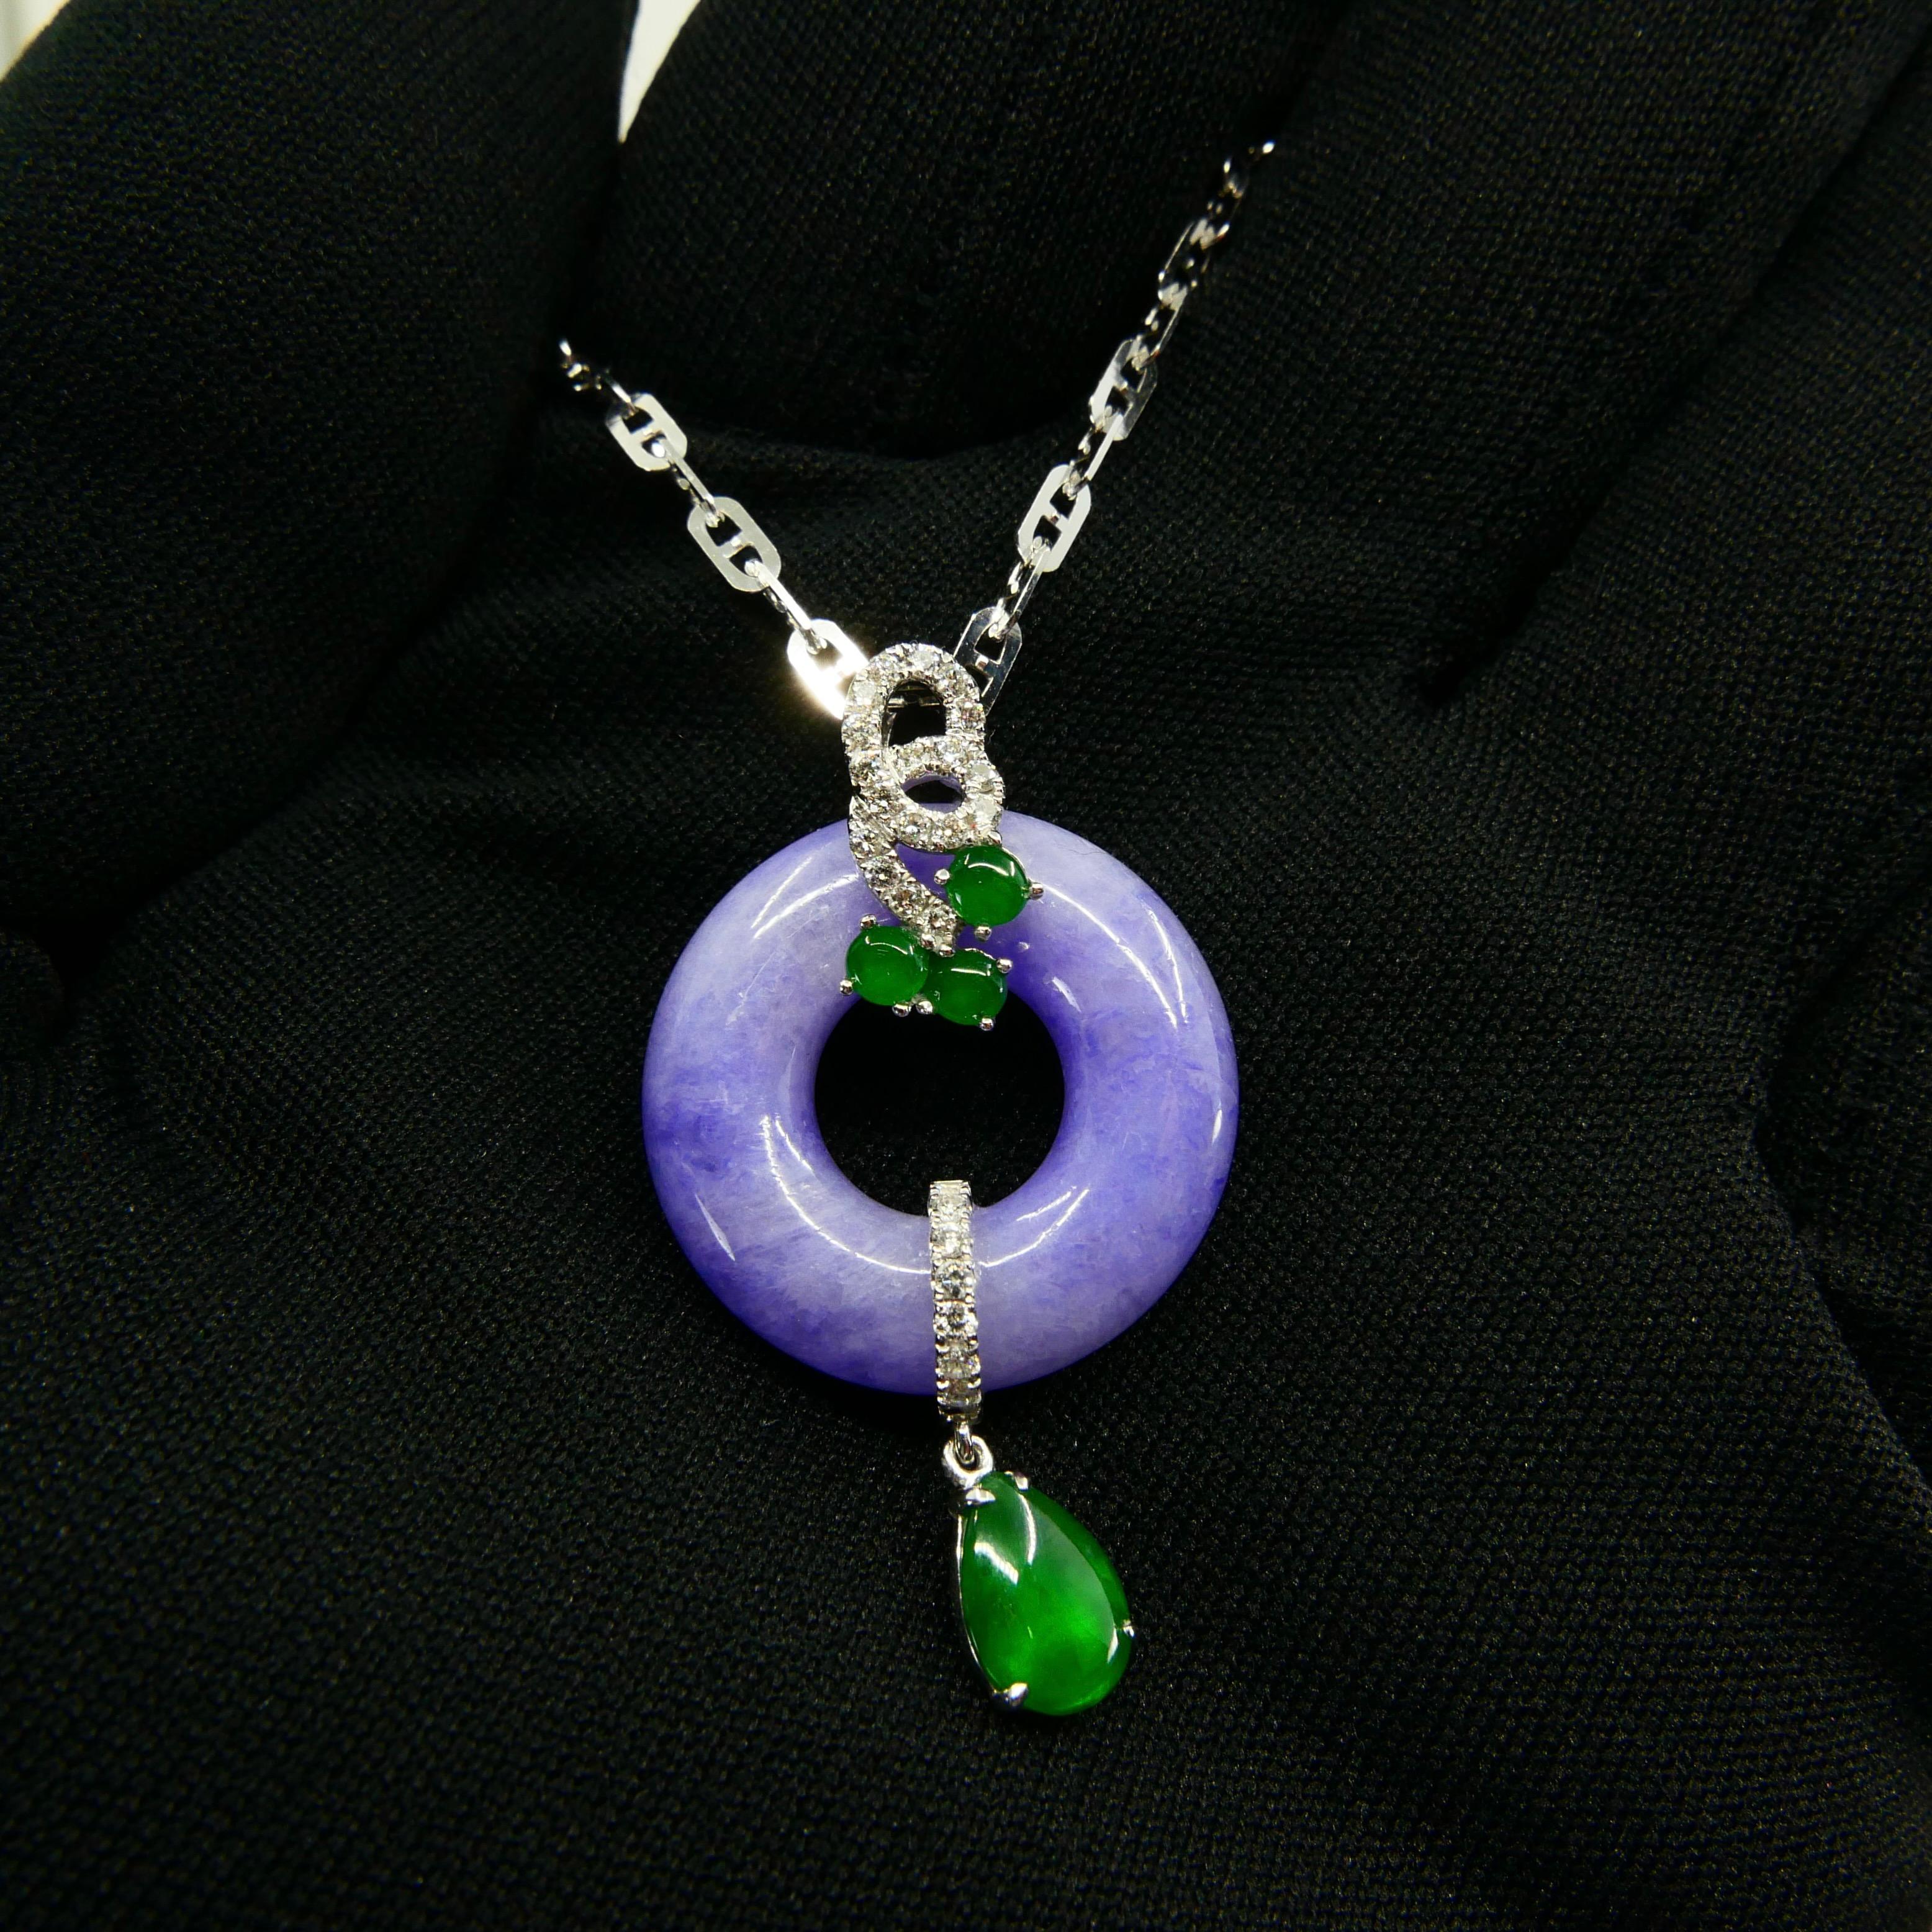 Certified Lavender & Imperial Green Jade Diamond Pendant Drop Necklace.  9